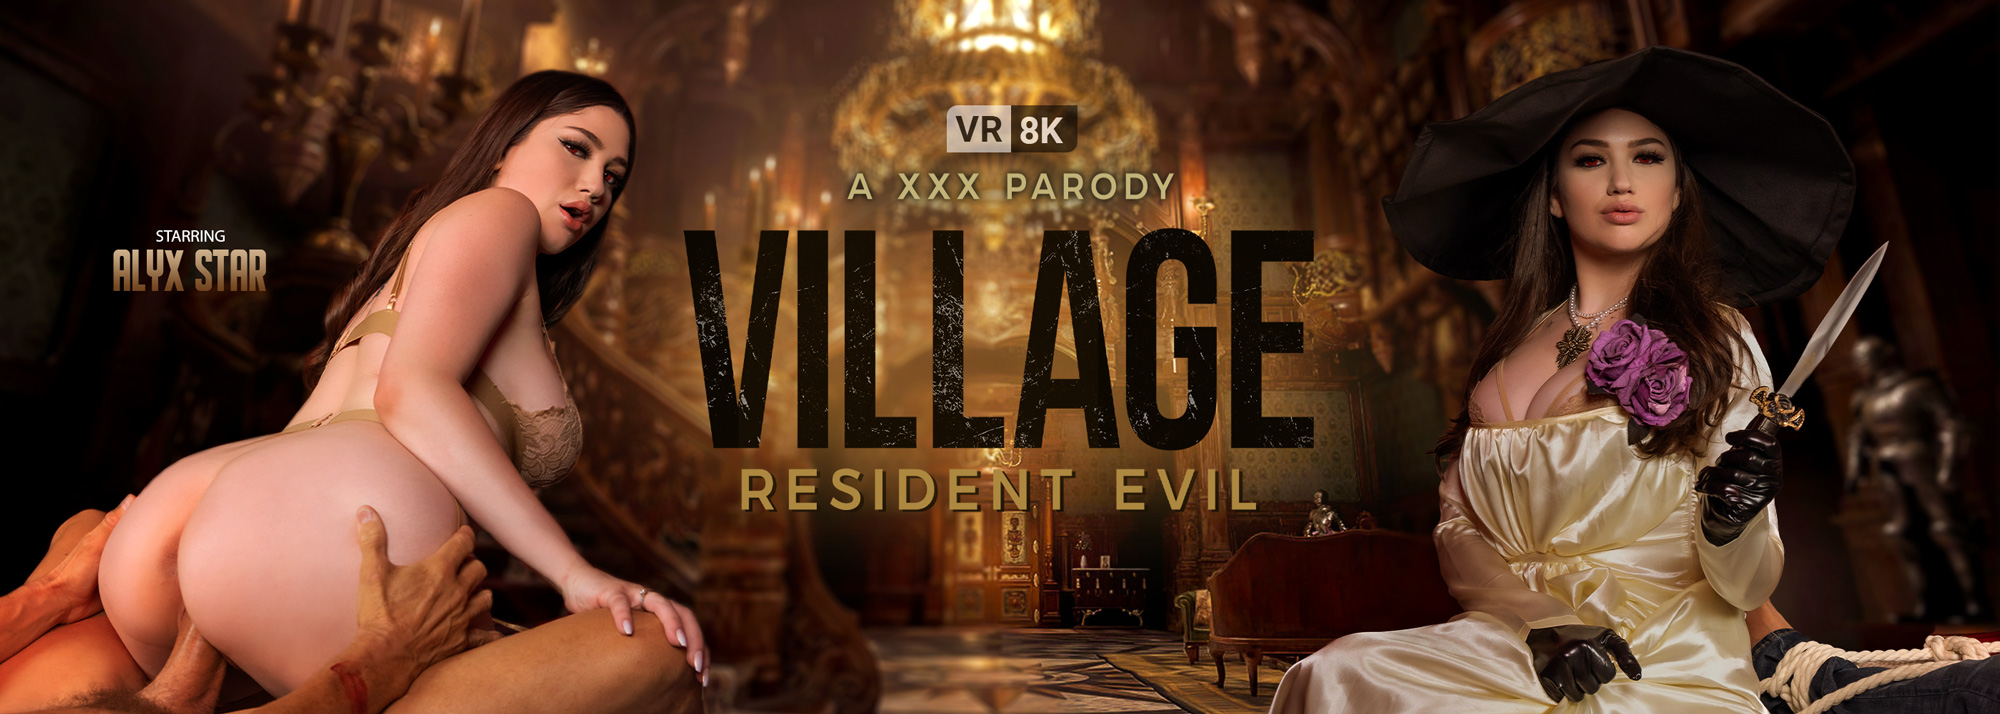 Resident Evil Village (A XXX Parody) - VR Porn Video, Starring: Alyx Star